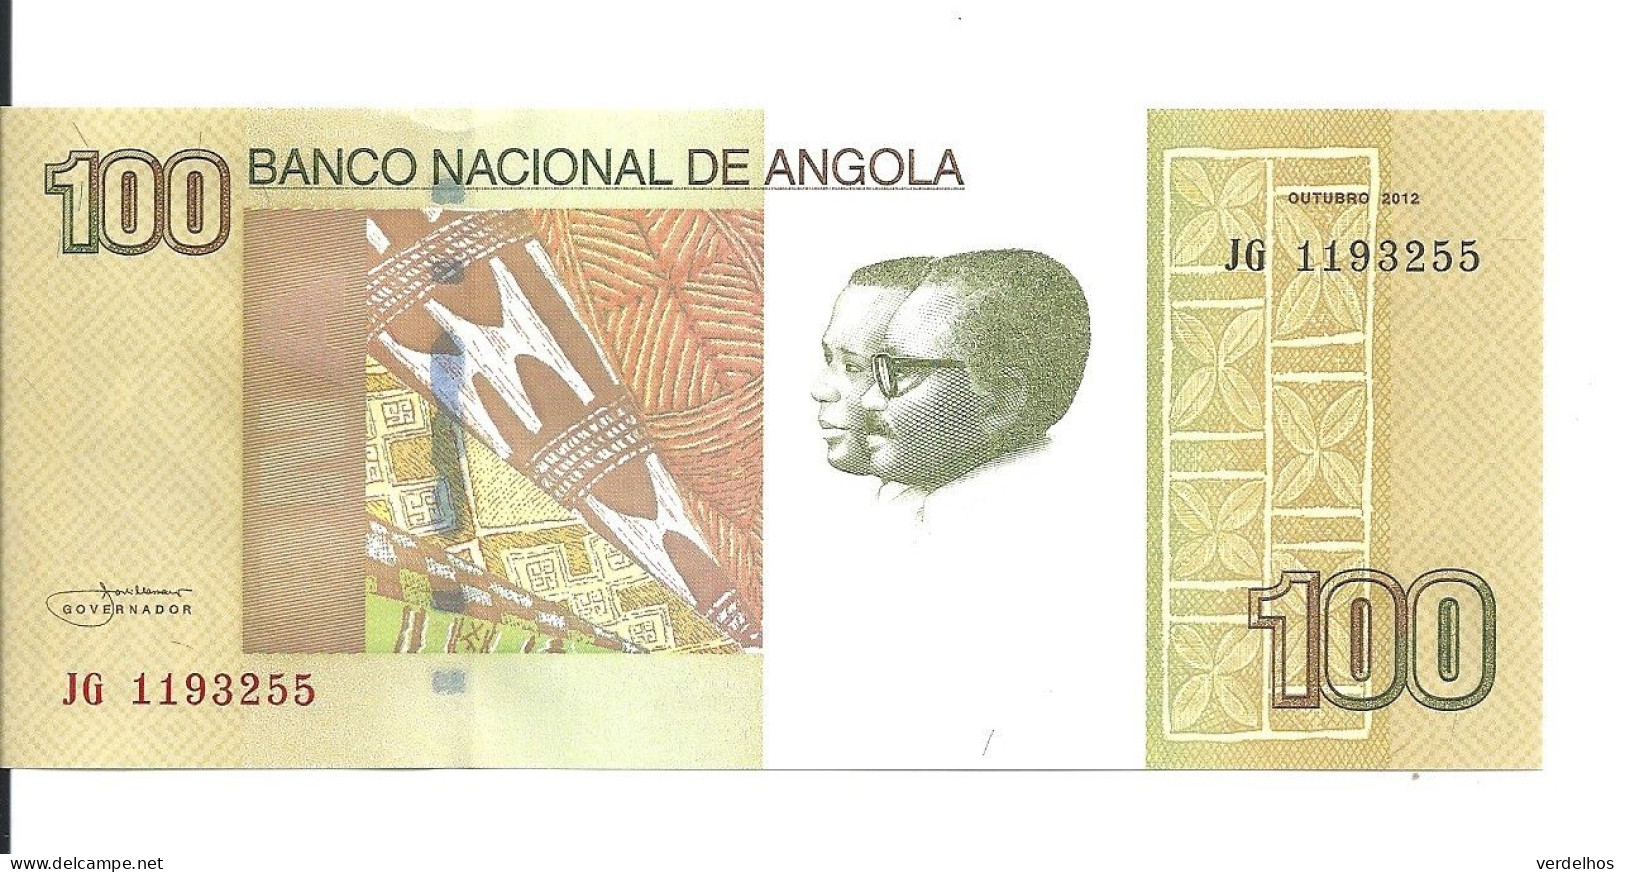 ANGOLA 100 KWANZAS 2012 UNC P 153 - Angola